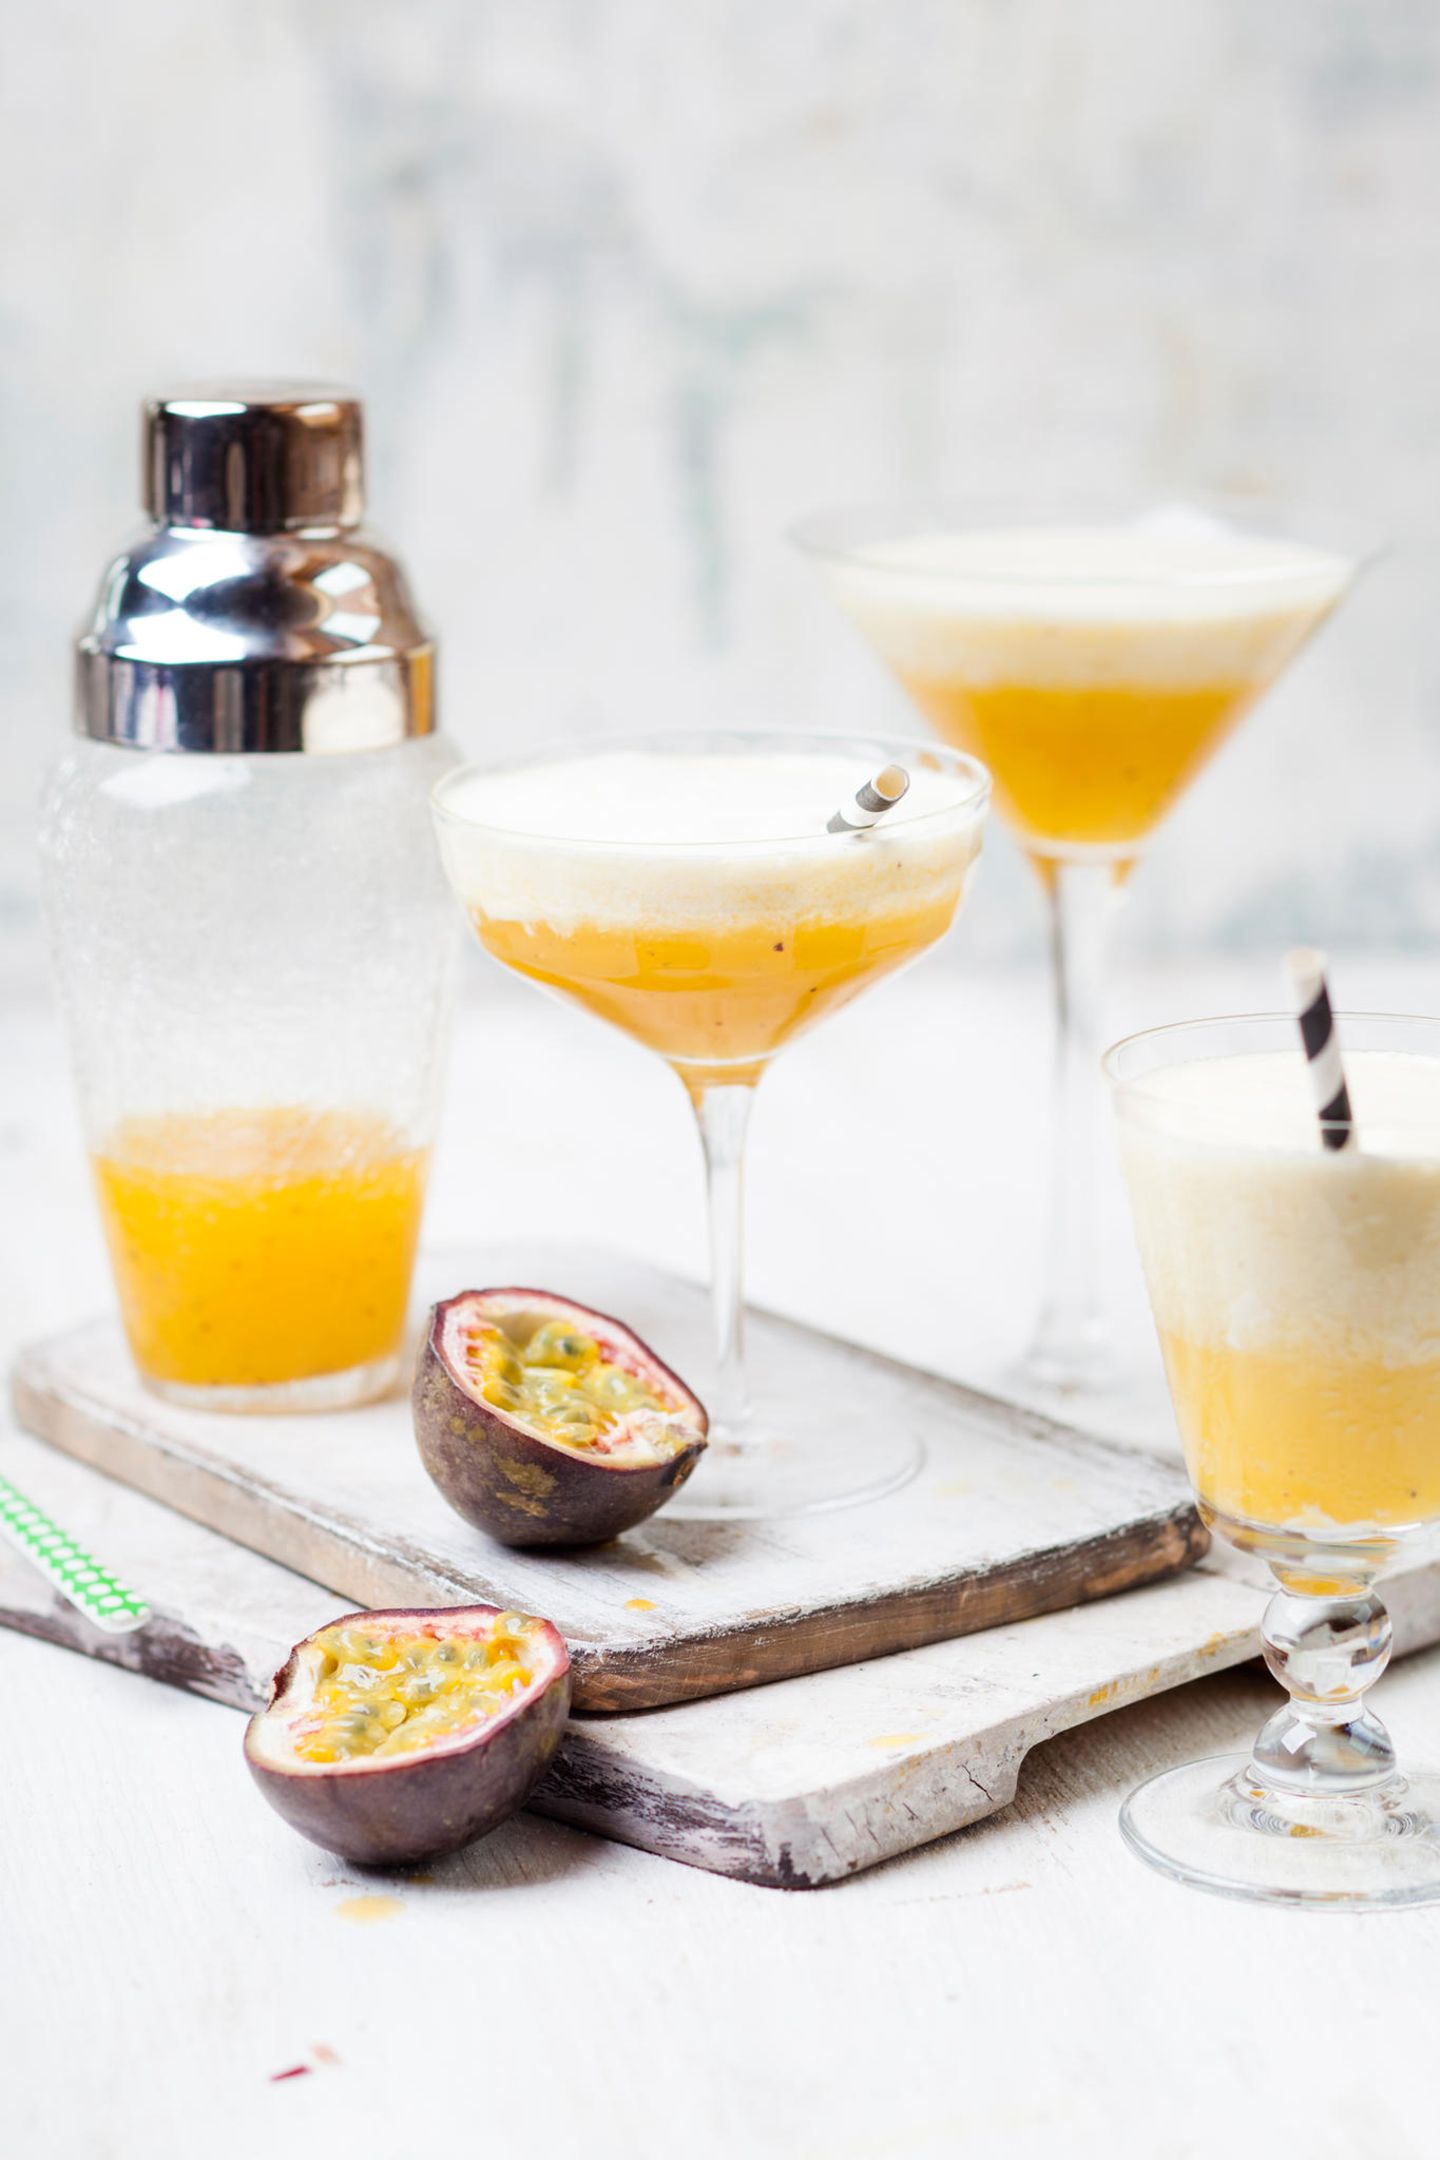 Porn star martini with pineapple juice